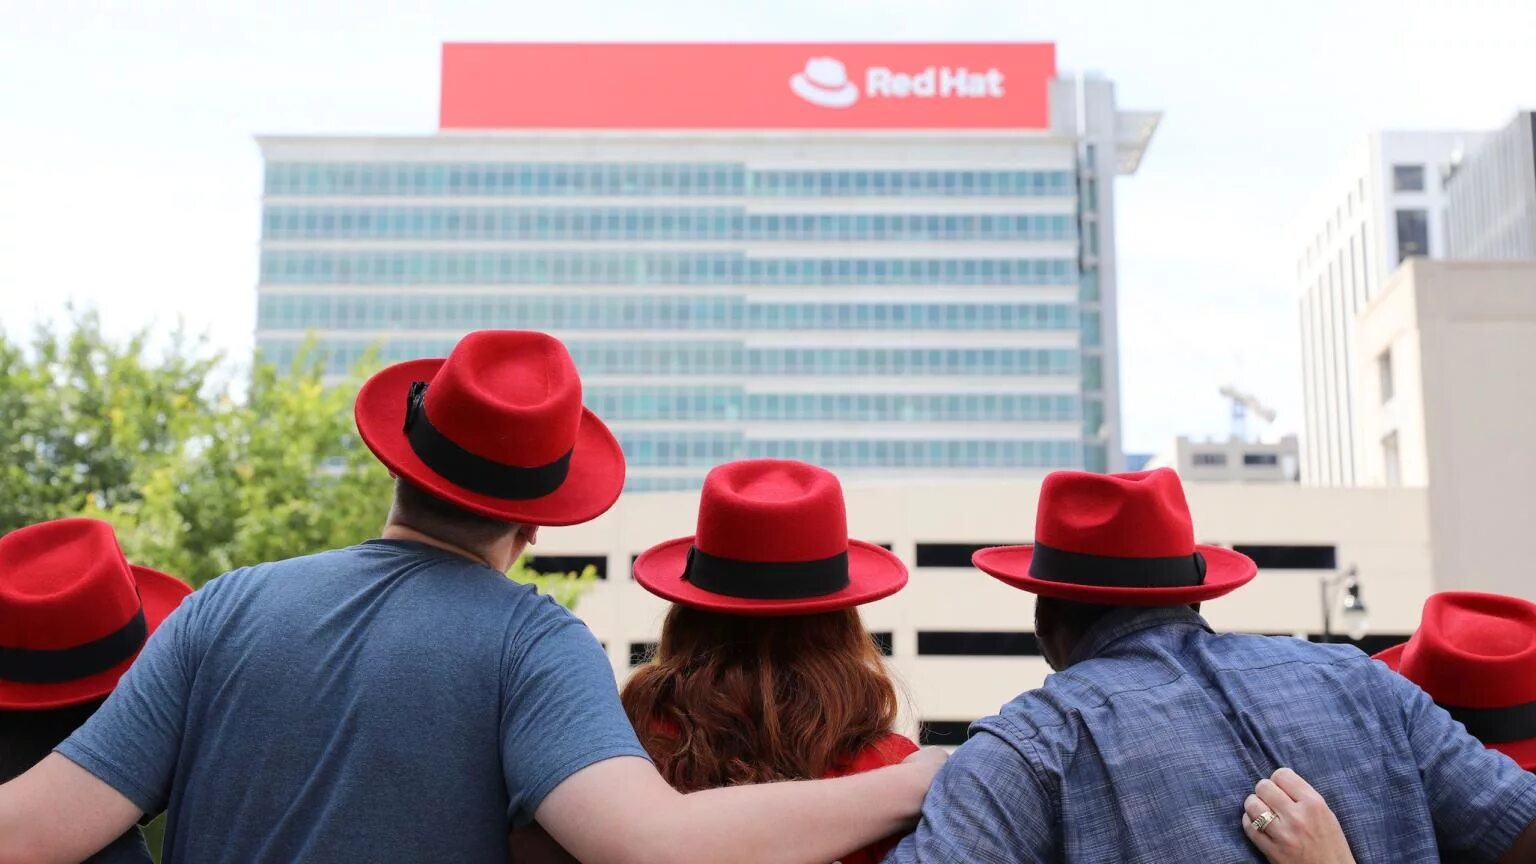 Red hat 4. Red hat компания. Red hat va IBM. Шляпа ред стредейшен 2. Red hat 7 фото.